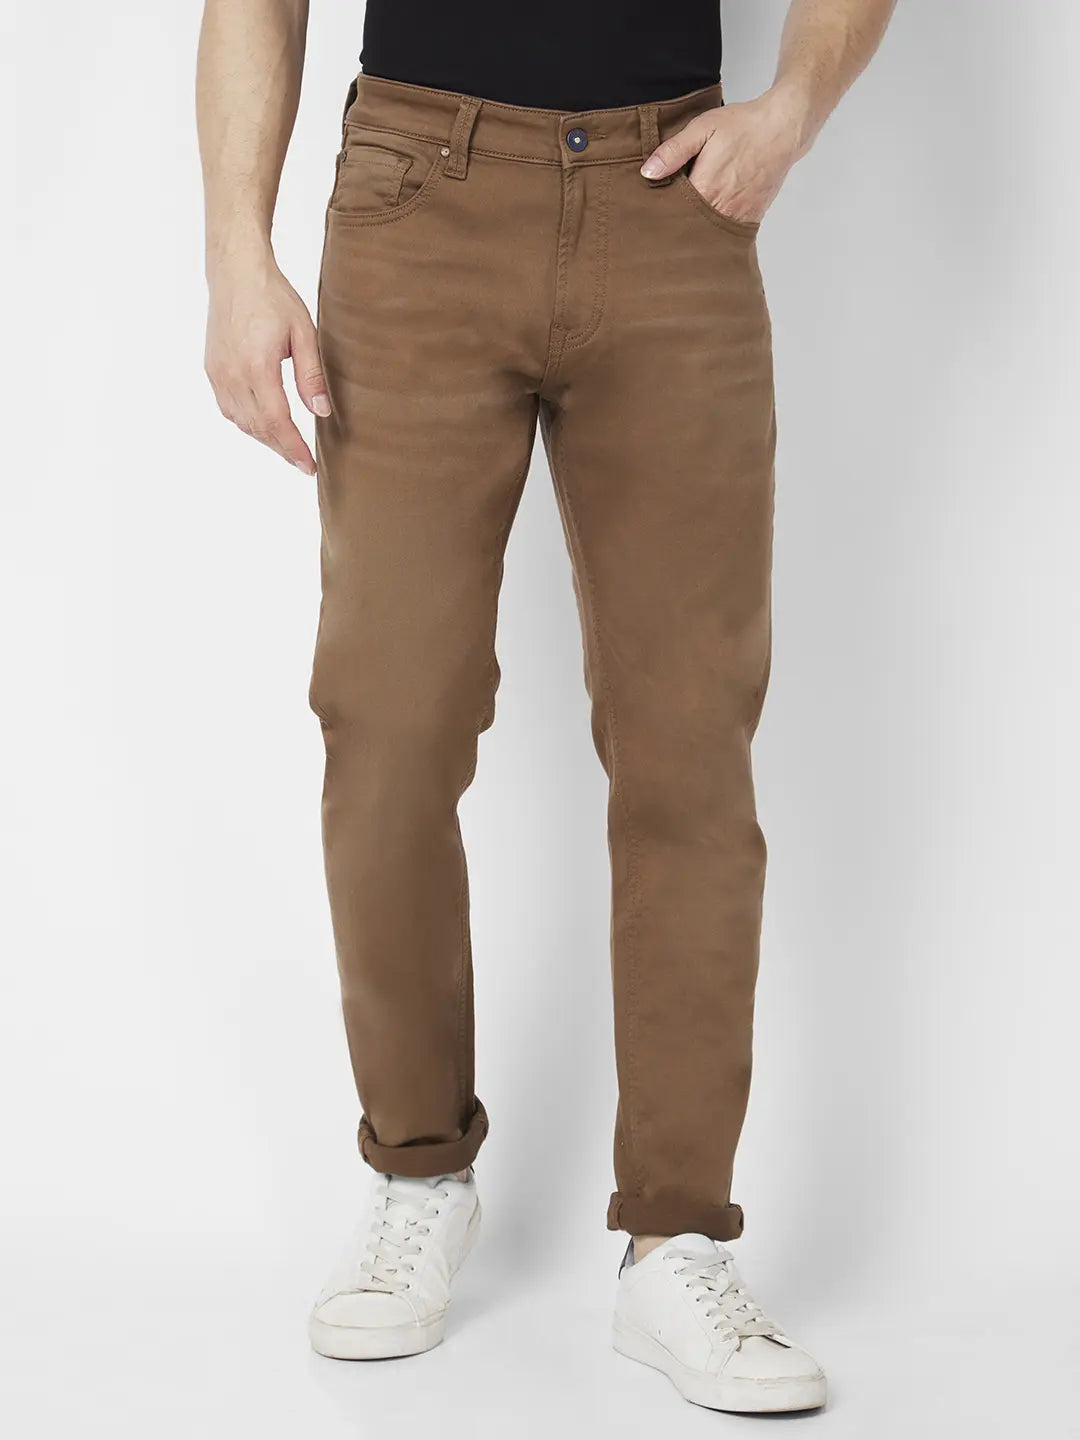 Spykar Men Coffee Brown Cotton Stretch Slim Fit Narrow Length Clean Look Low Rise Jeans (Skinny)